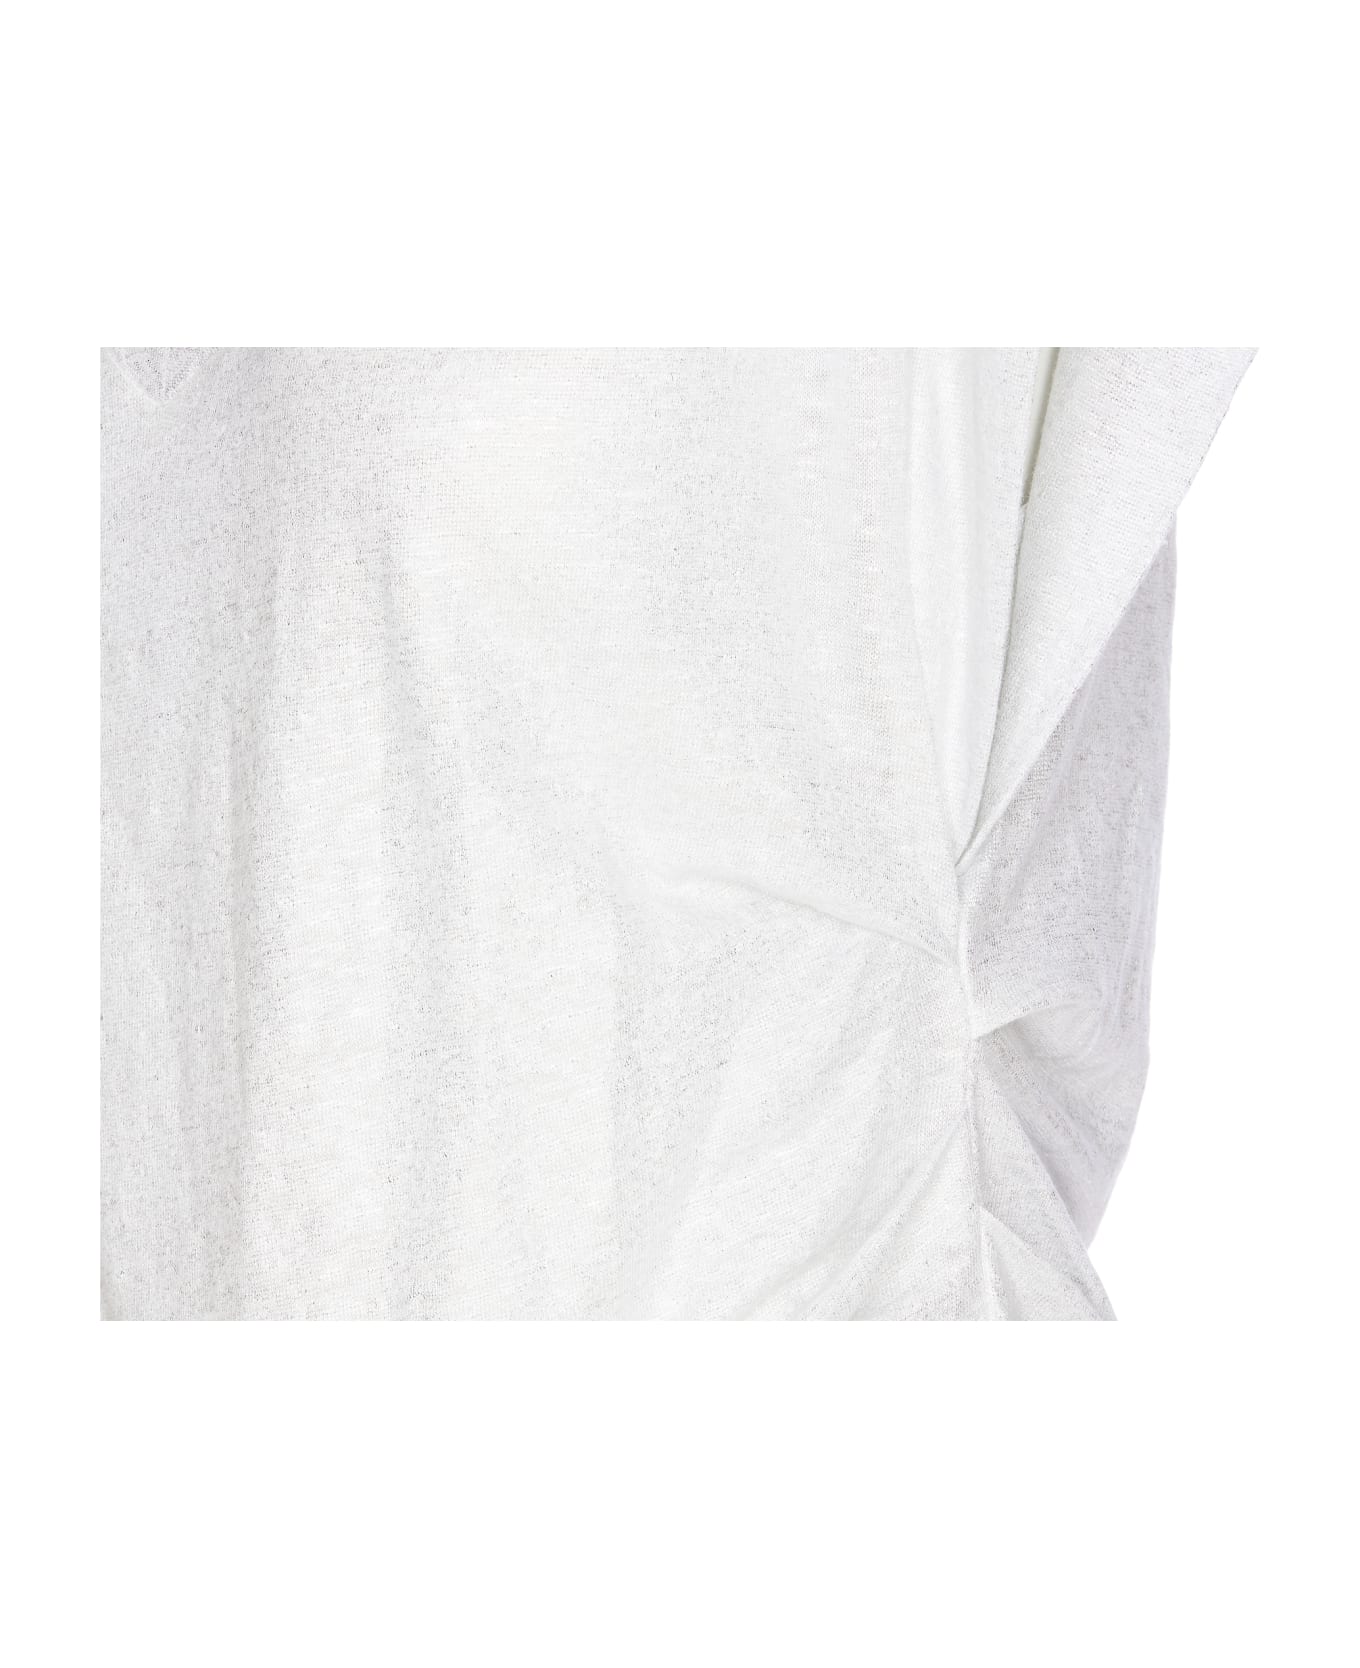 Pinko Mani T-shirt - White